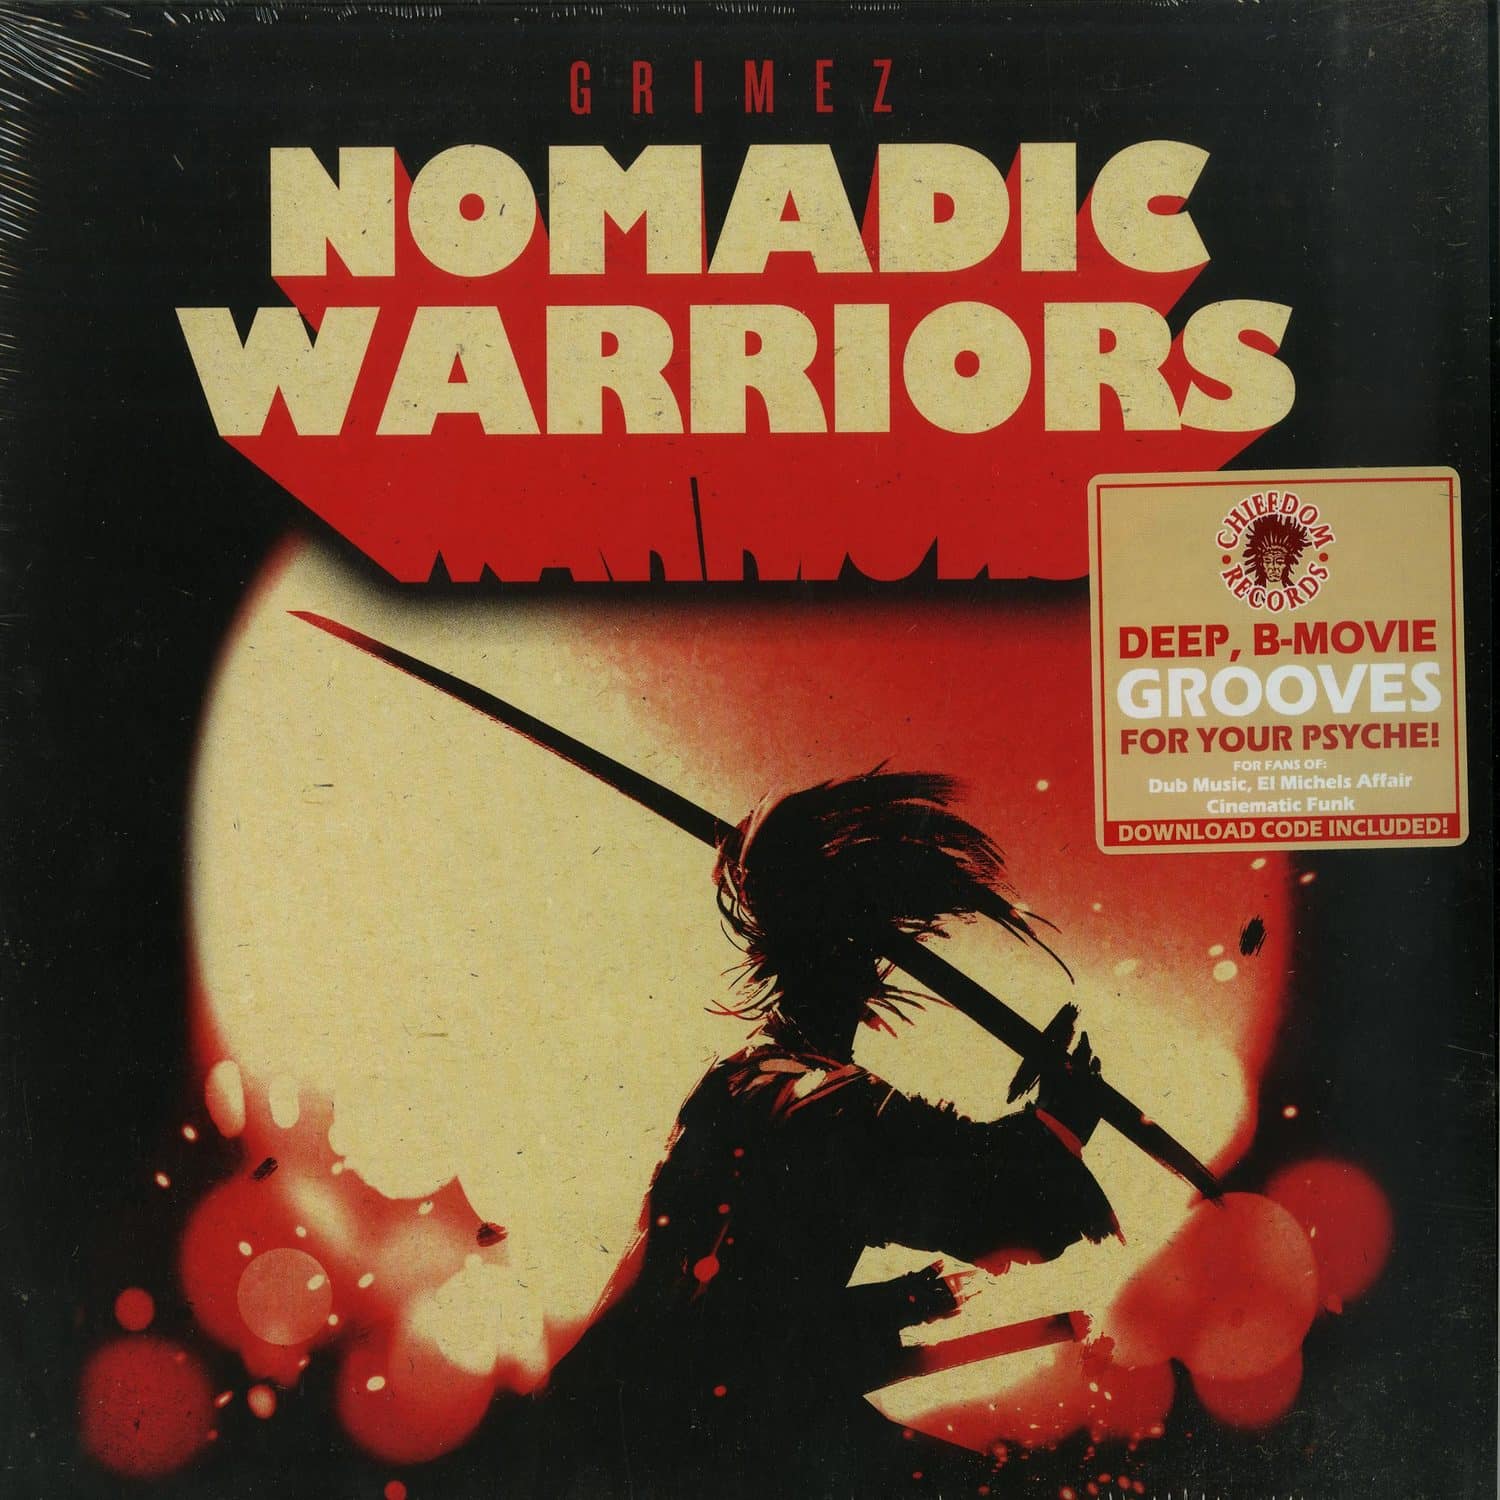 Grimez - NOMADIC WARRIORS 2 